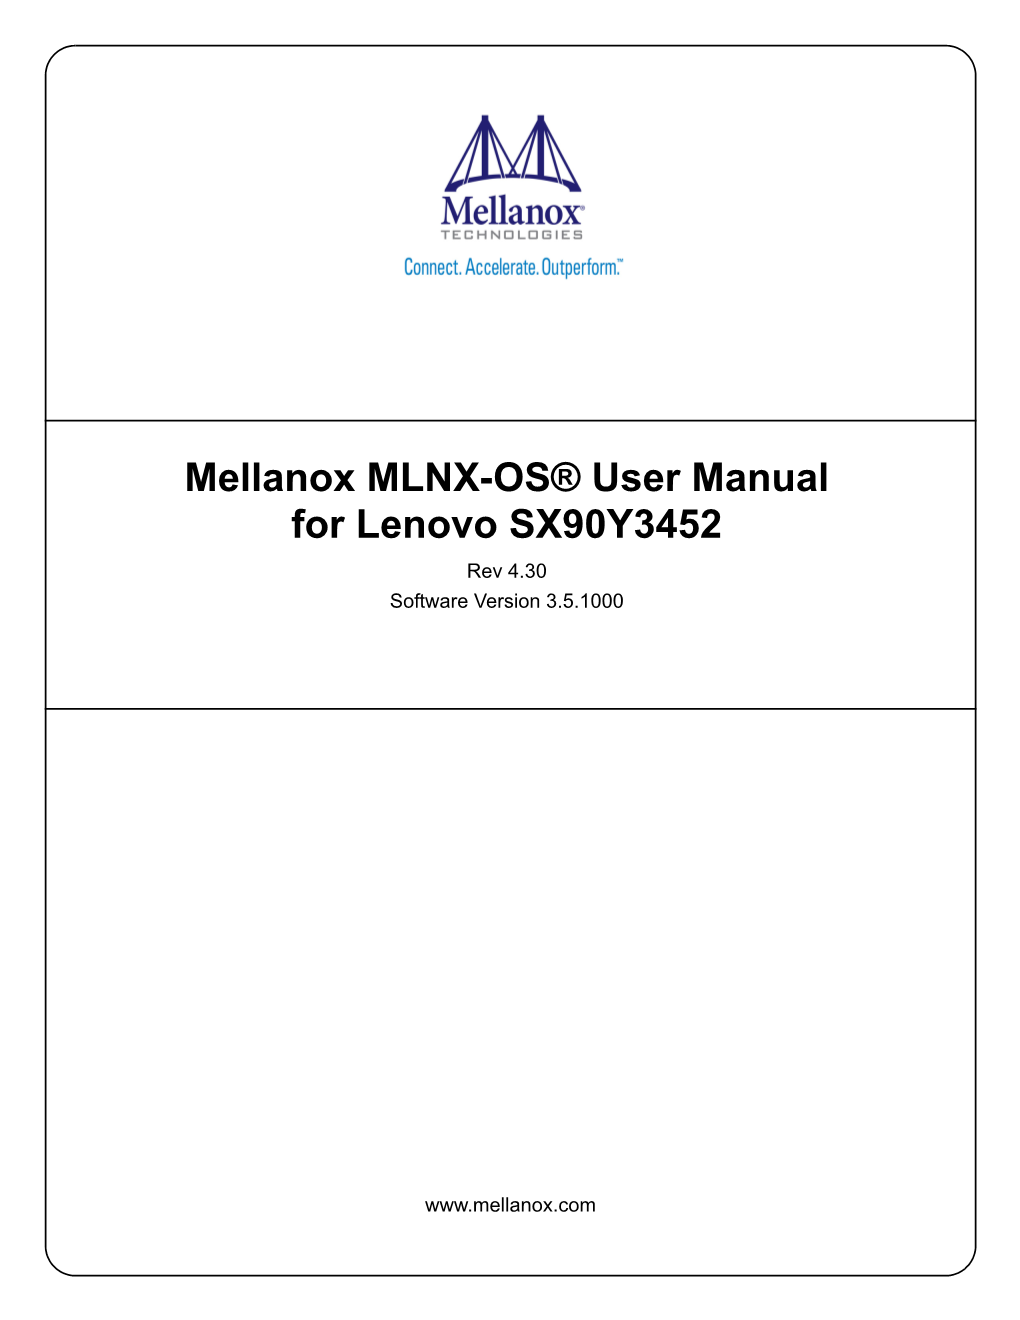 Mellanox MLNX-OS® User Manual for Lenovo SX90Y3452 Rev 4.30 Software Version 3.5.1000